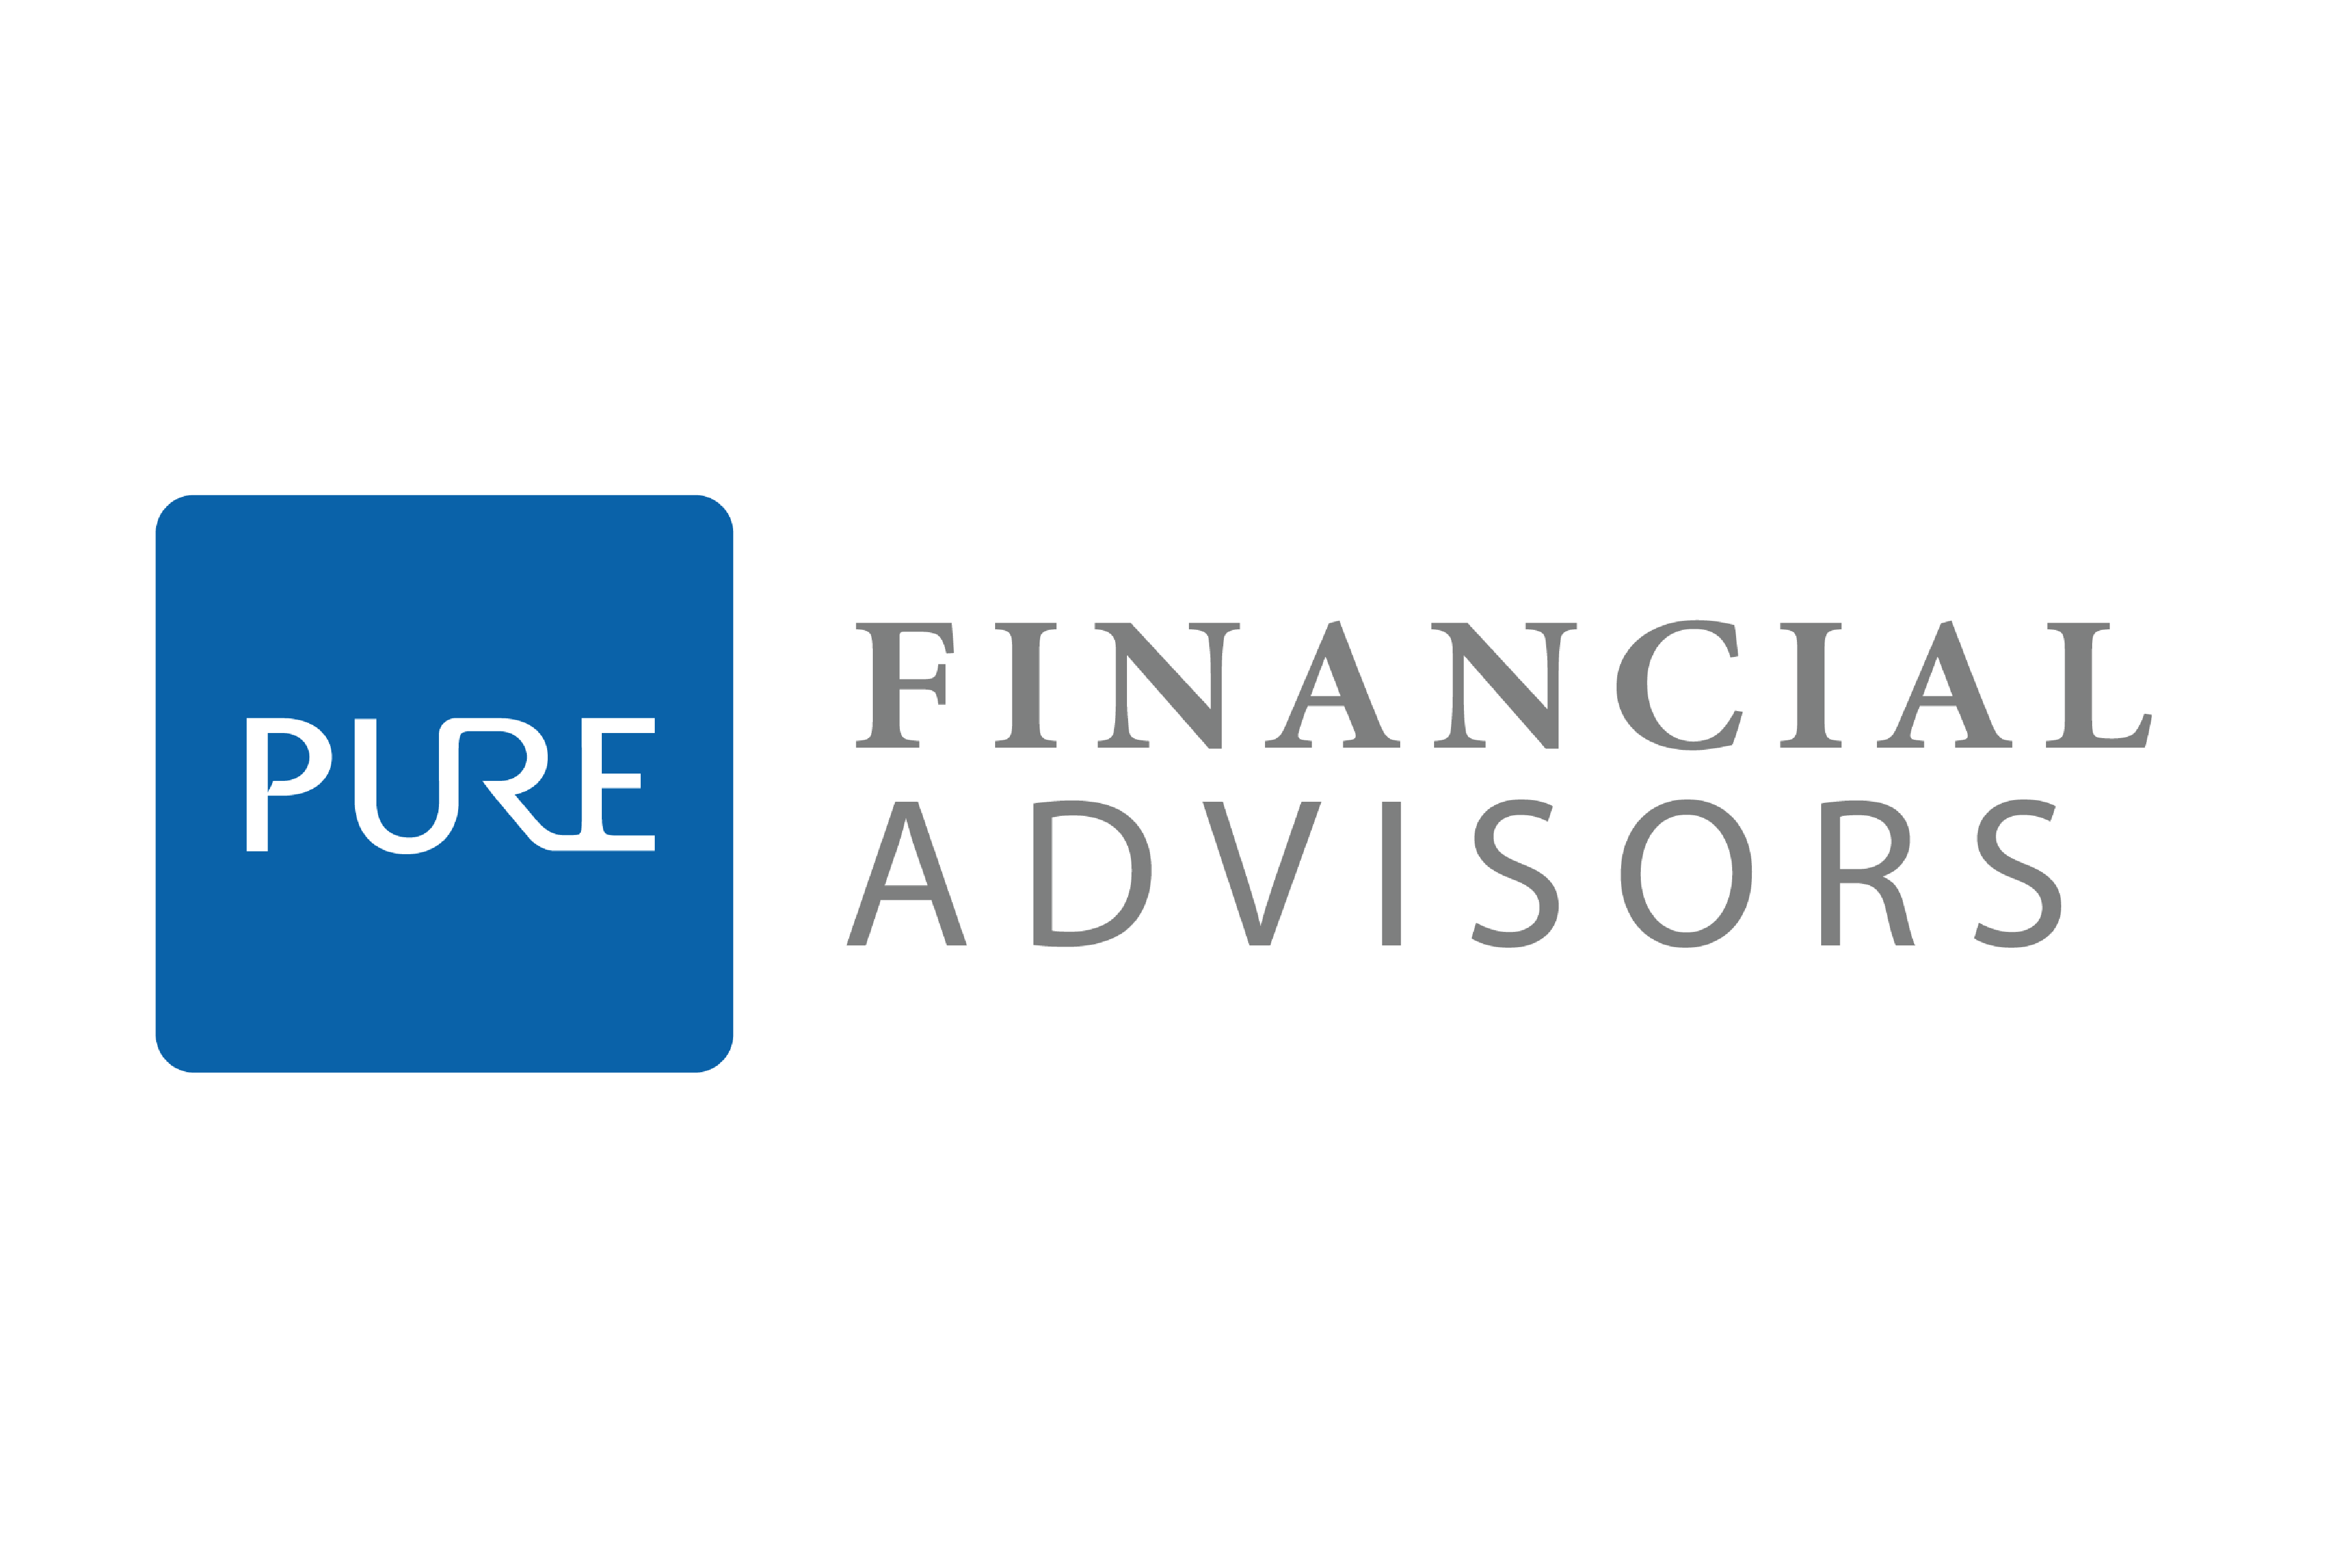 Personal Finance Blog - Pure Financial Advisors, Inc.